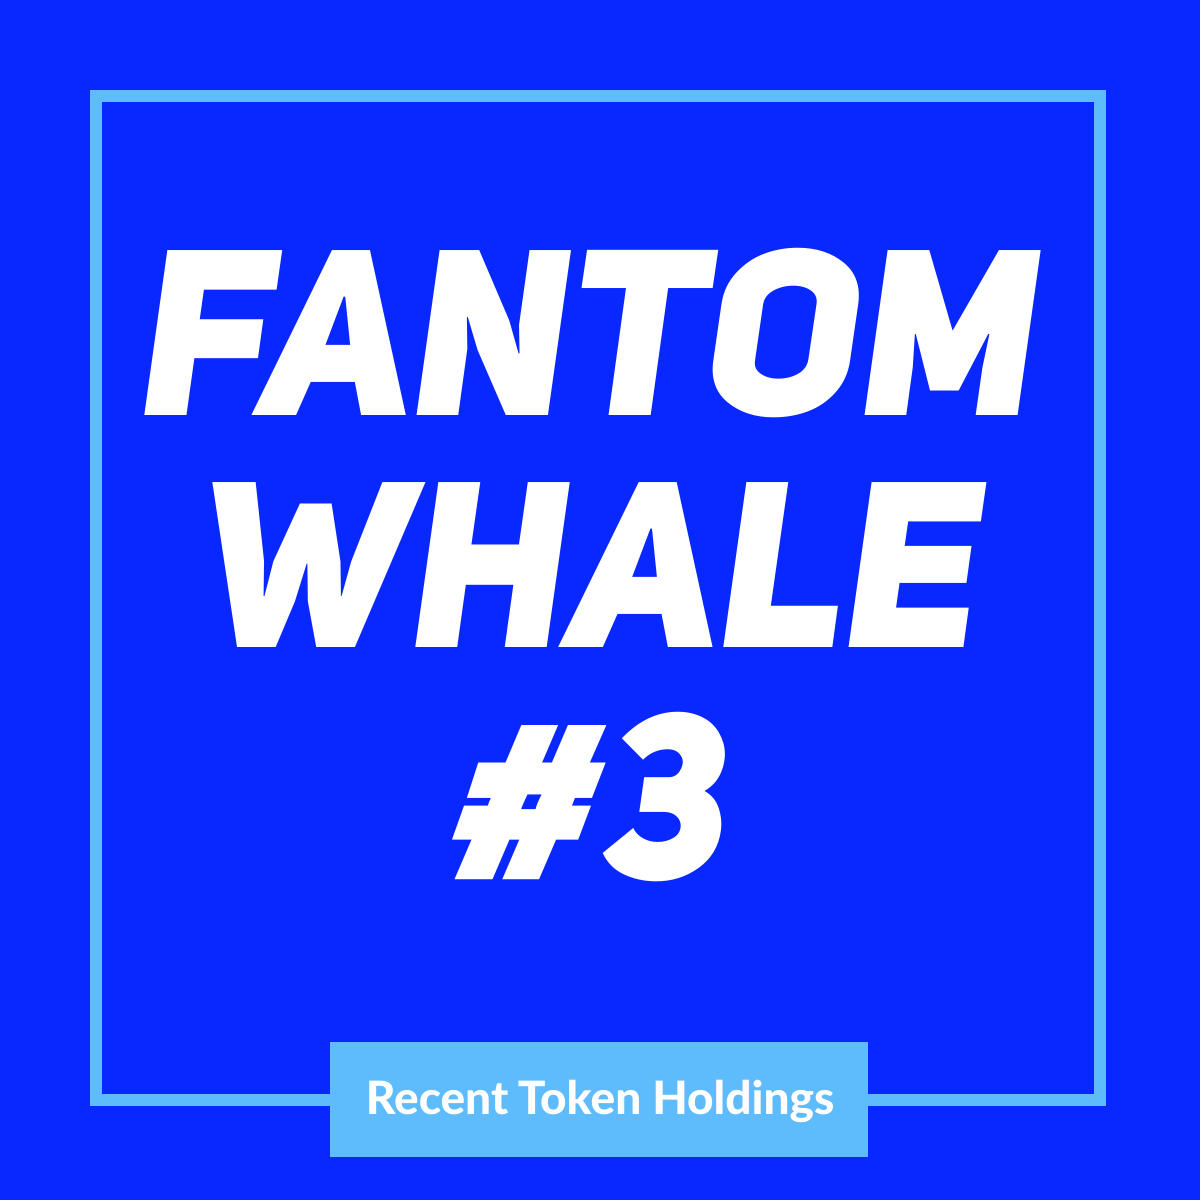 Fantom Whale #3